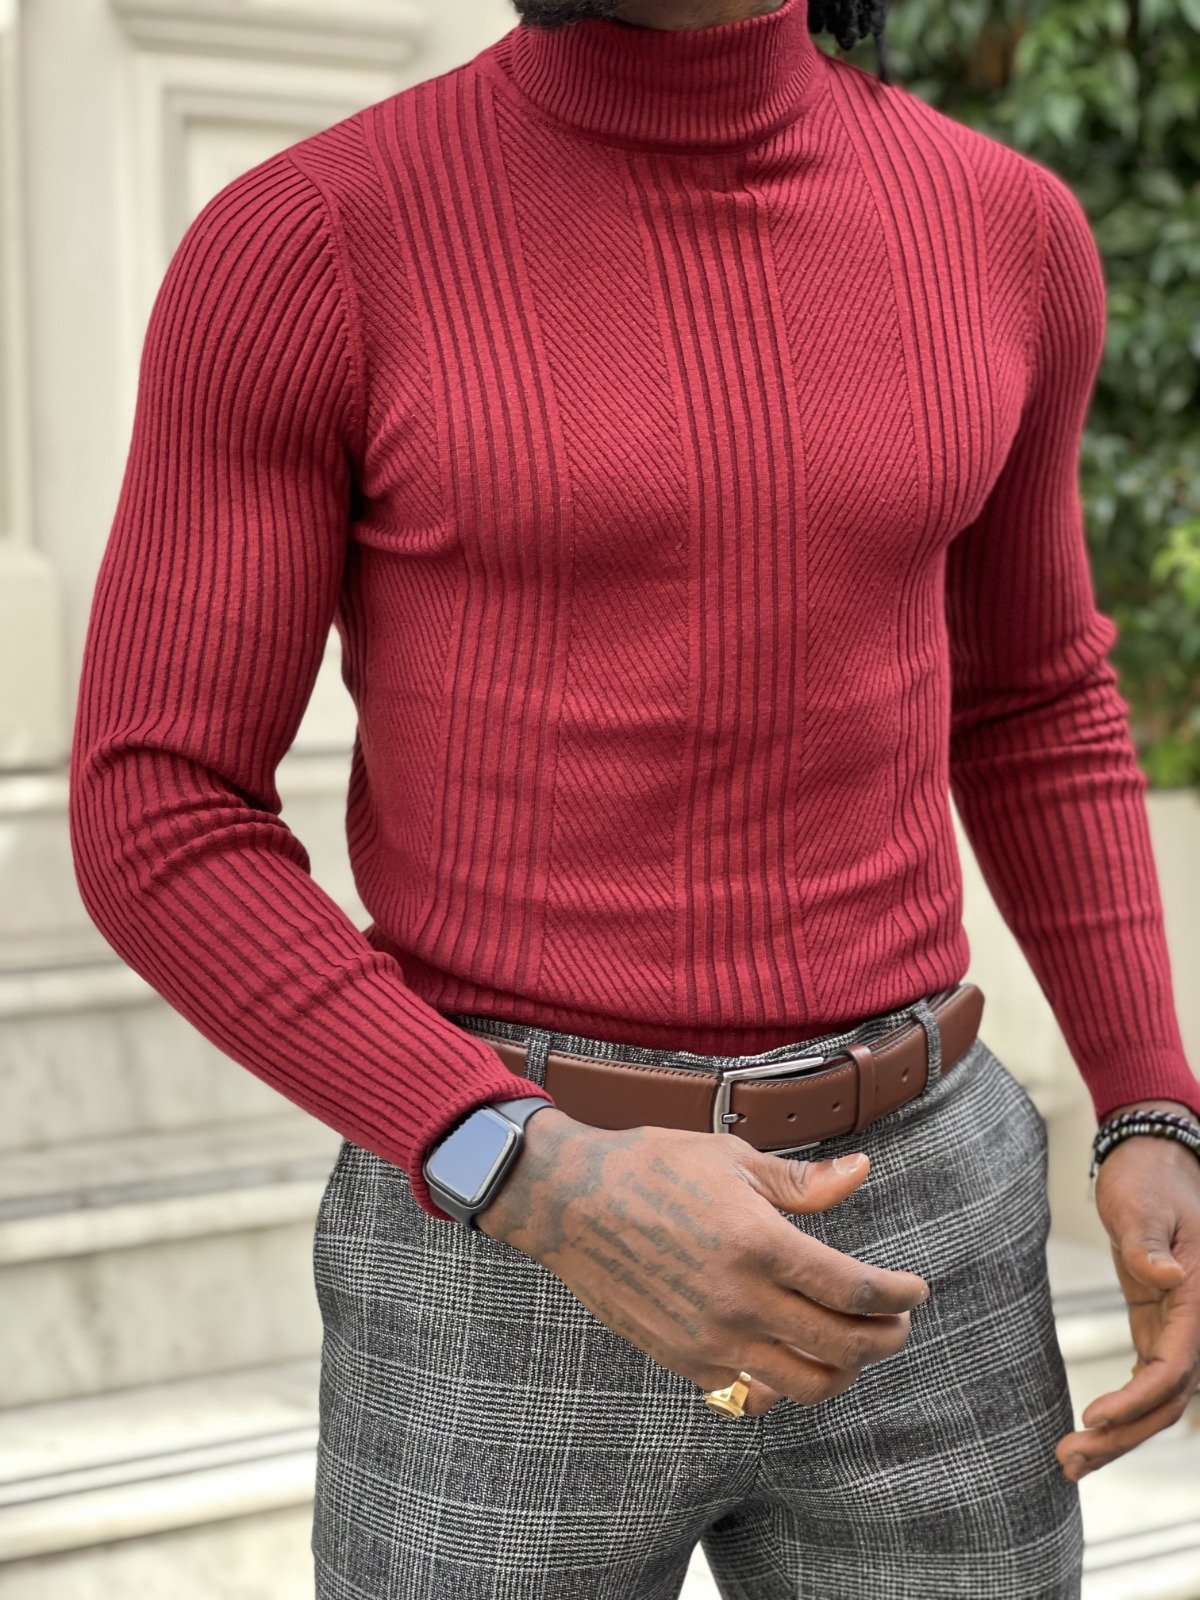 Treviso Red Turtleneck Sweater